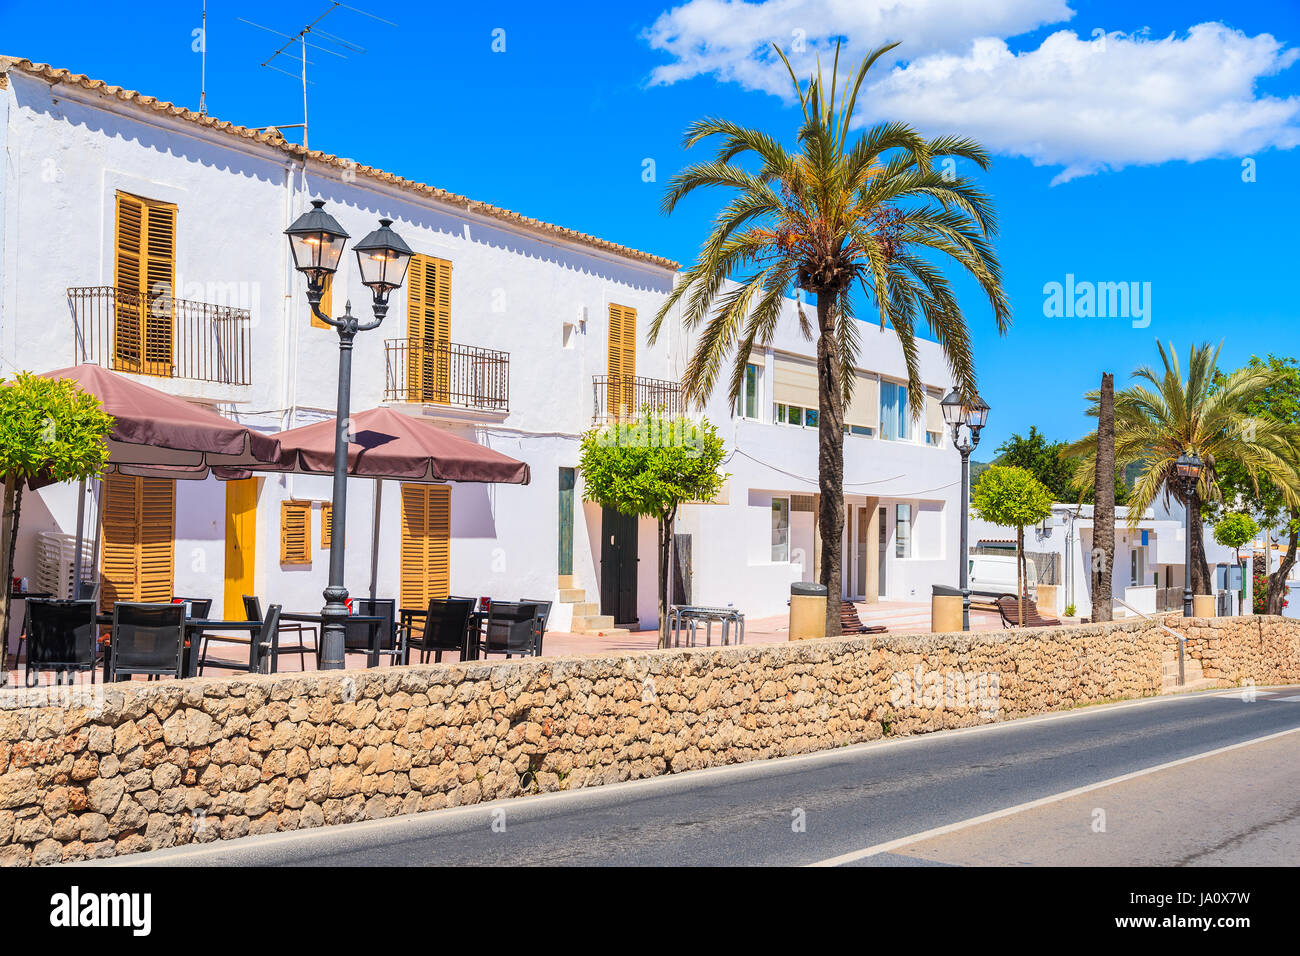 Typical Spanish style houses and palm tree on street of Sant Josep de sa Talaia town, Ibiza island, Spain Stock Photo